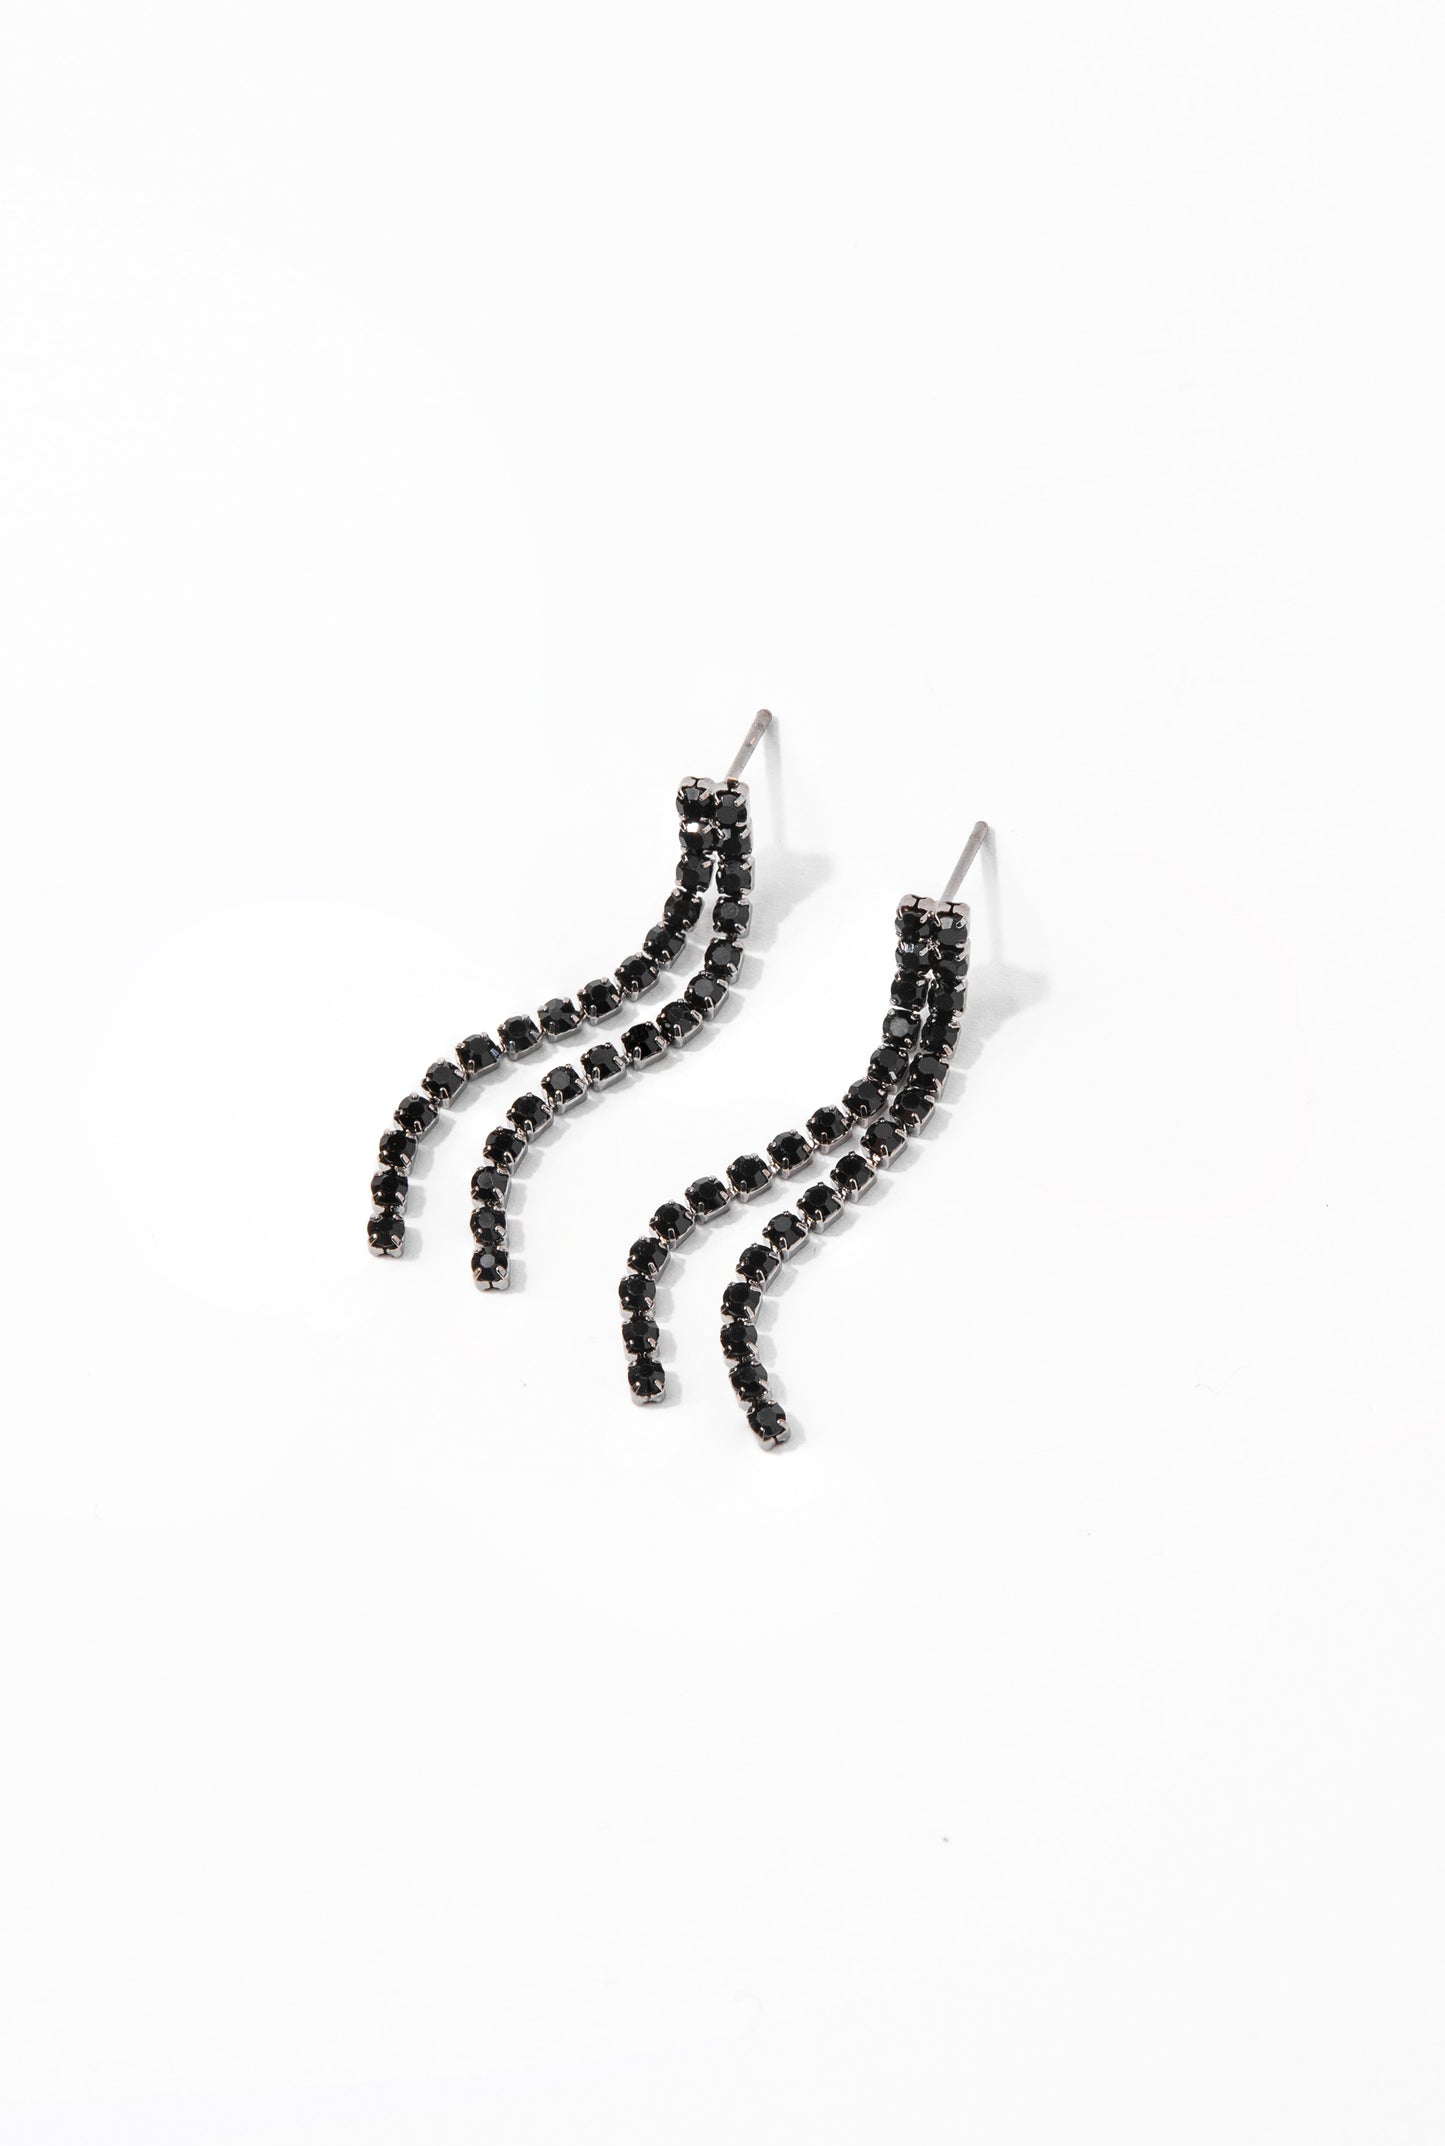 Iris Rhinestone Necklace and Earring Set